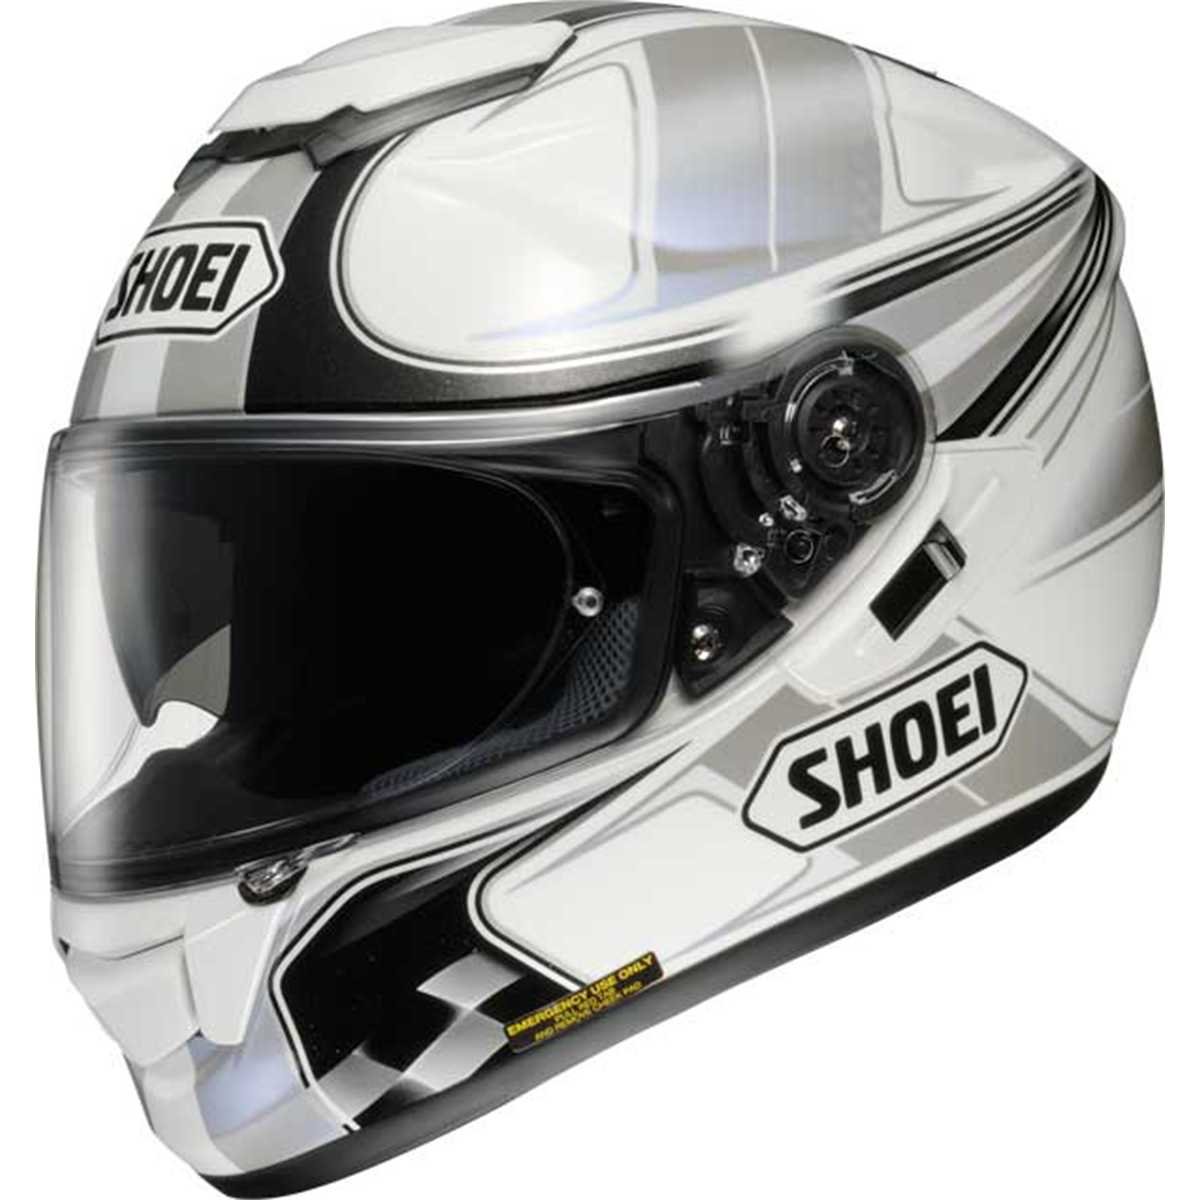 Shoei Gt Air 1 Helmet Regalia Tc 6 Size S 55 56 Webshop Mc Helmet Re Motors